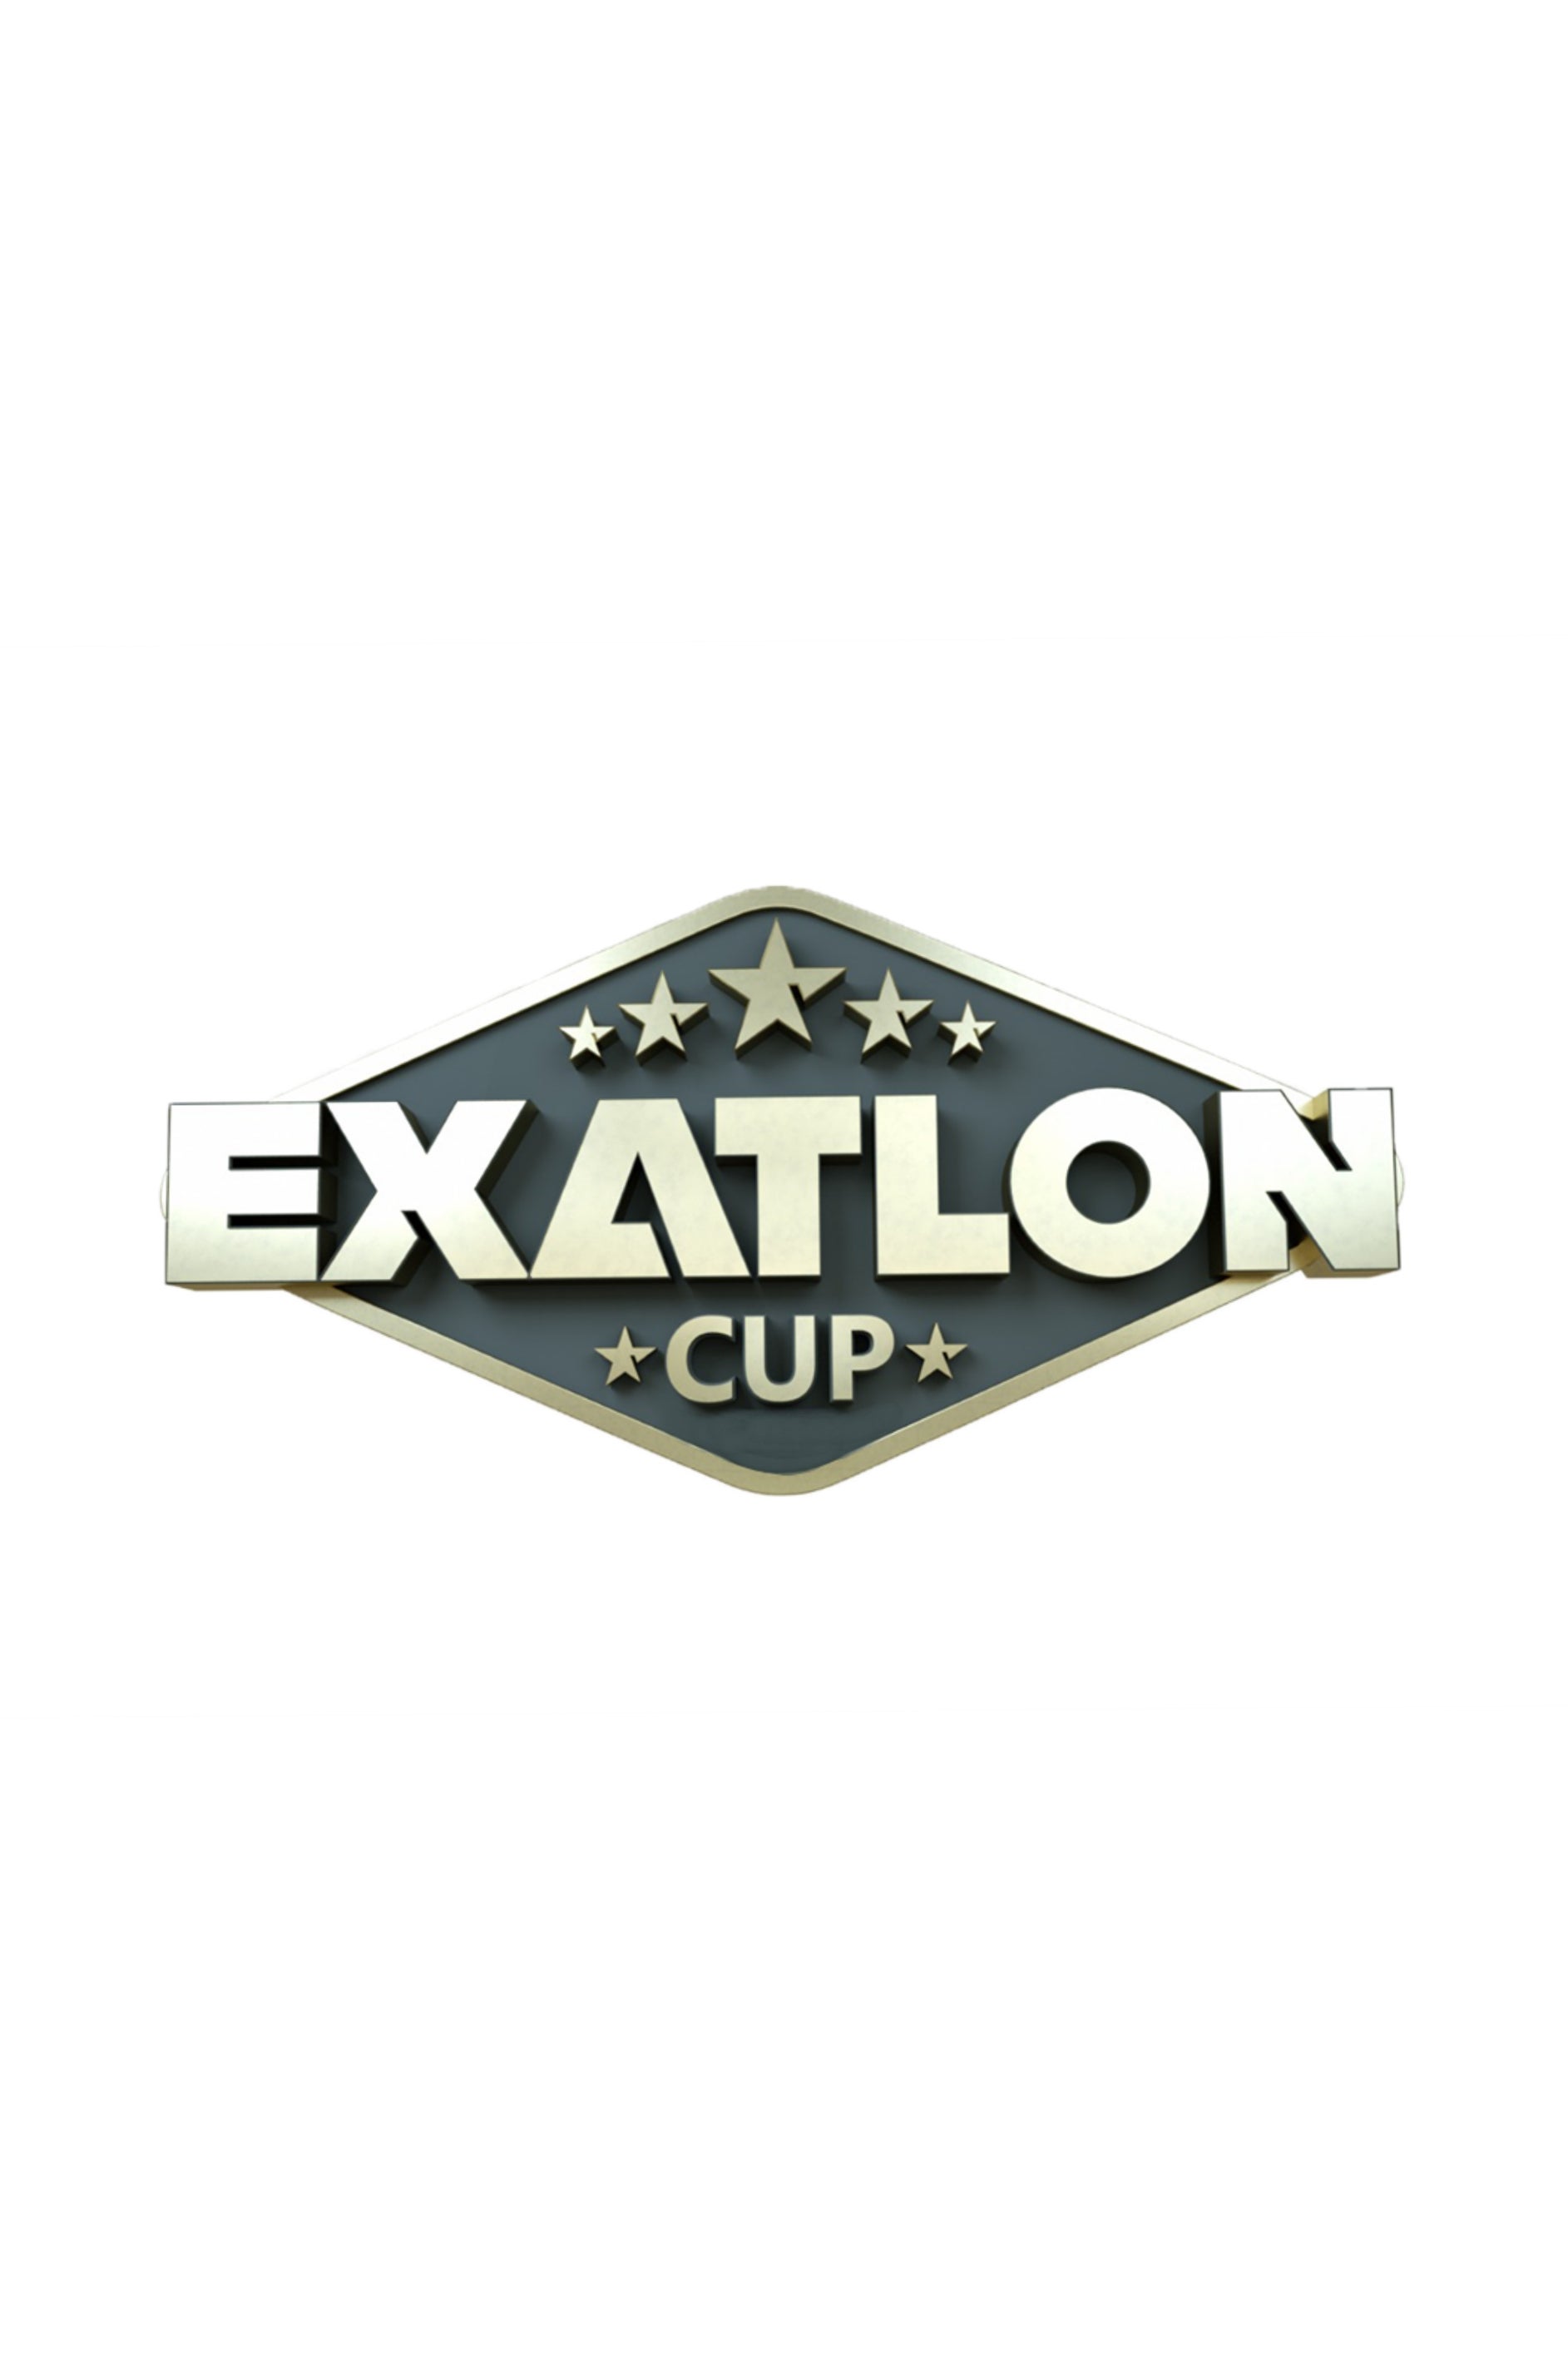 TV ratings for Exatlon Cup in Noruega. Acunn Internet TV series